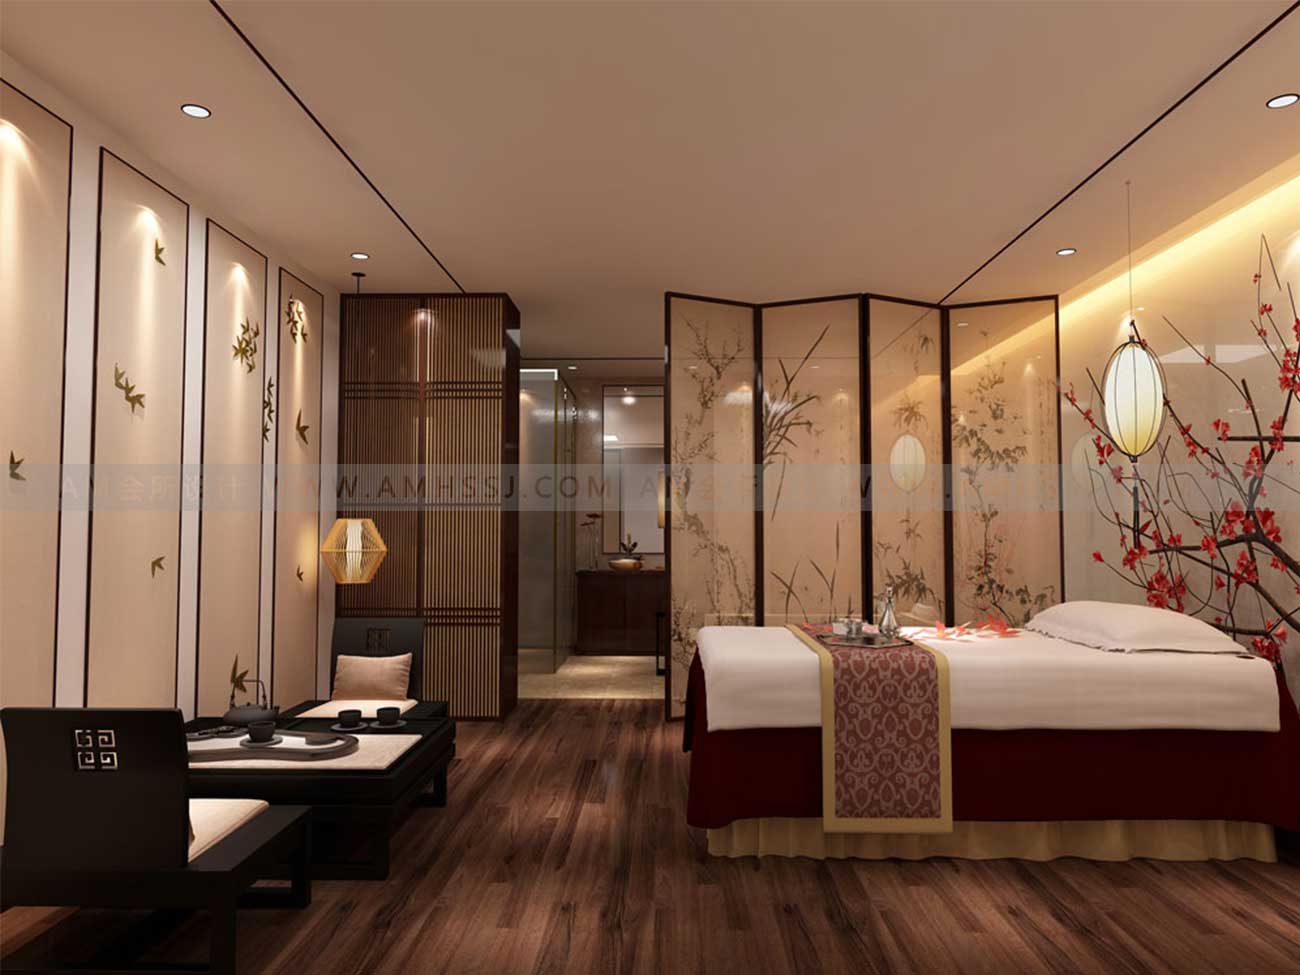 AM DESIGN | Spa room design of golden scale SPA Spa